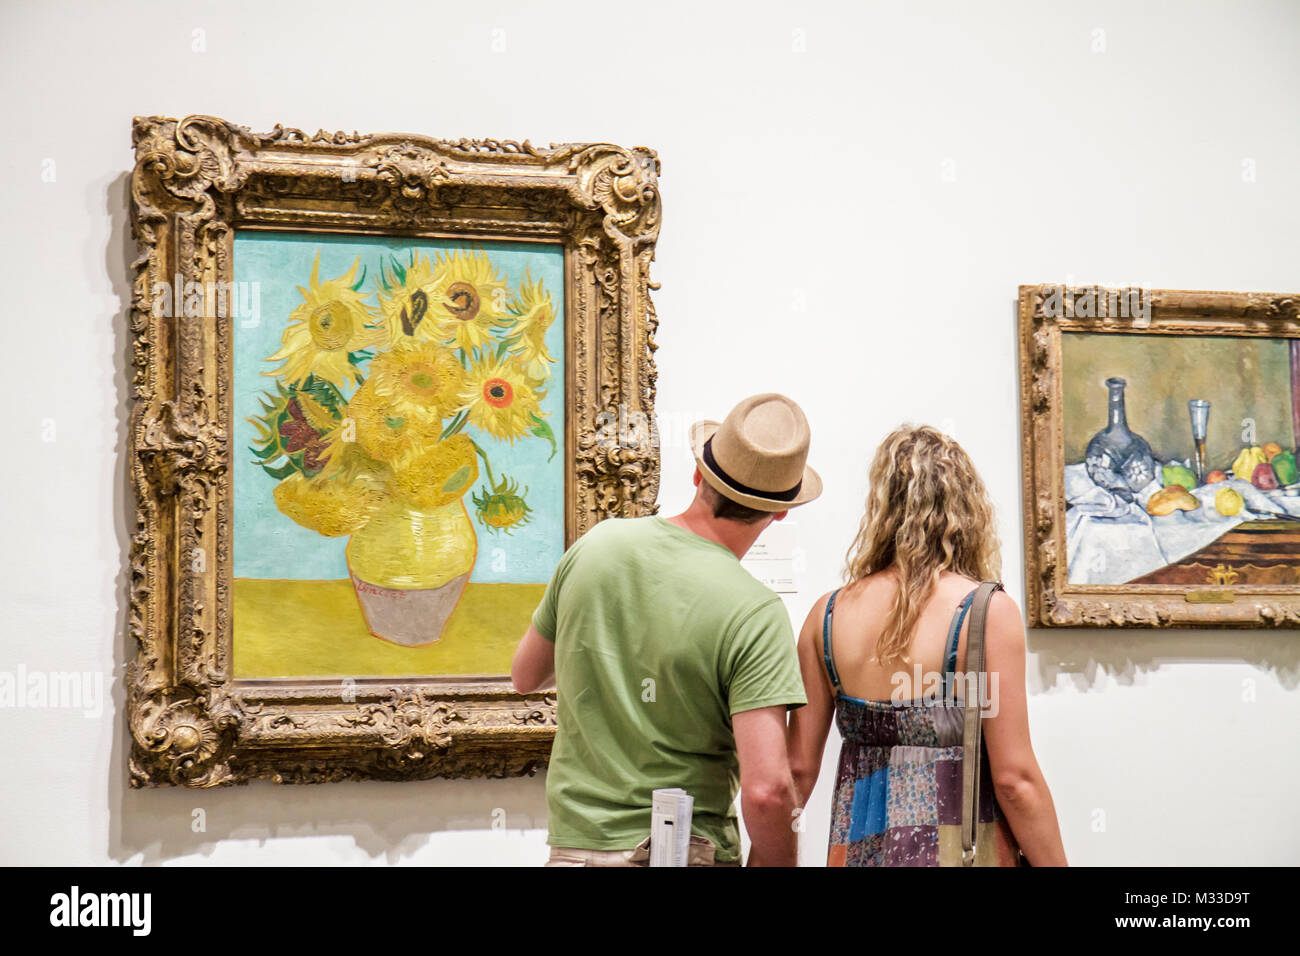 Philadelphia Pennsylvania,Museum of Art collection,paintings Sunflowers Vincent van Gogh,Still Life a Dessert Paul Cézanne,man woman couple looking Stock Photo